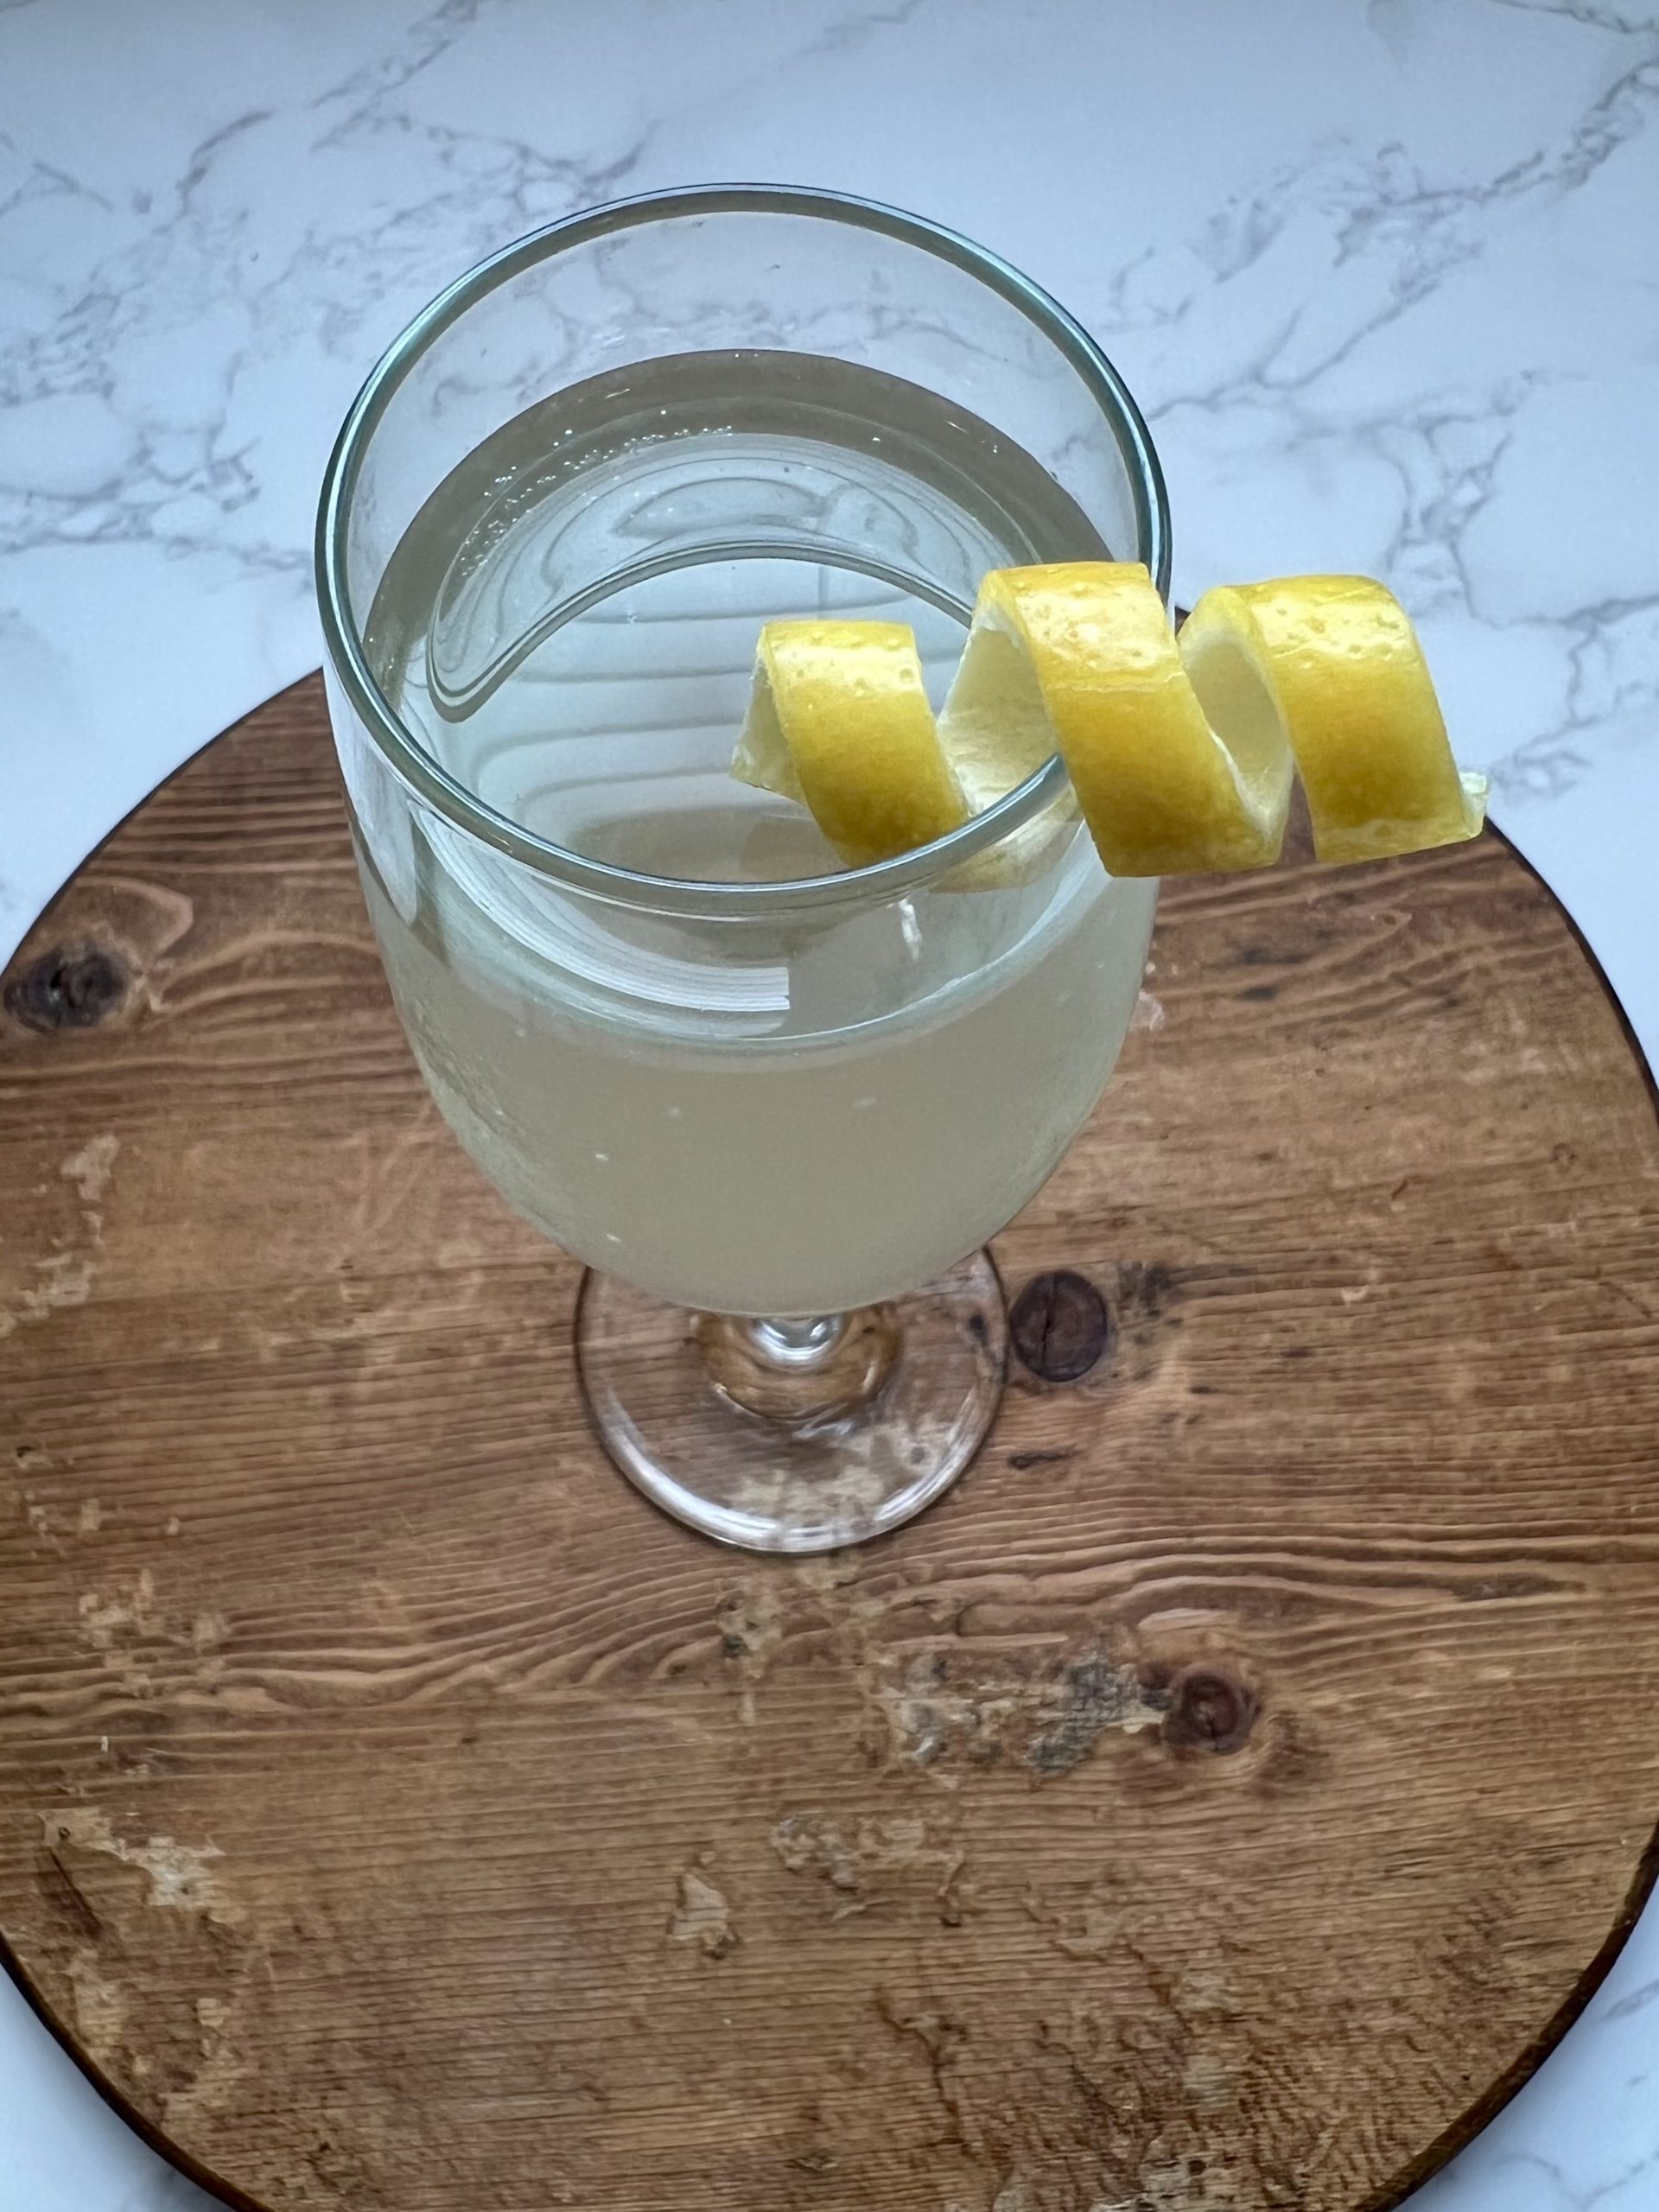 A close up of a lemon twist garnish on a glass of sparkling wine.